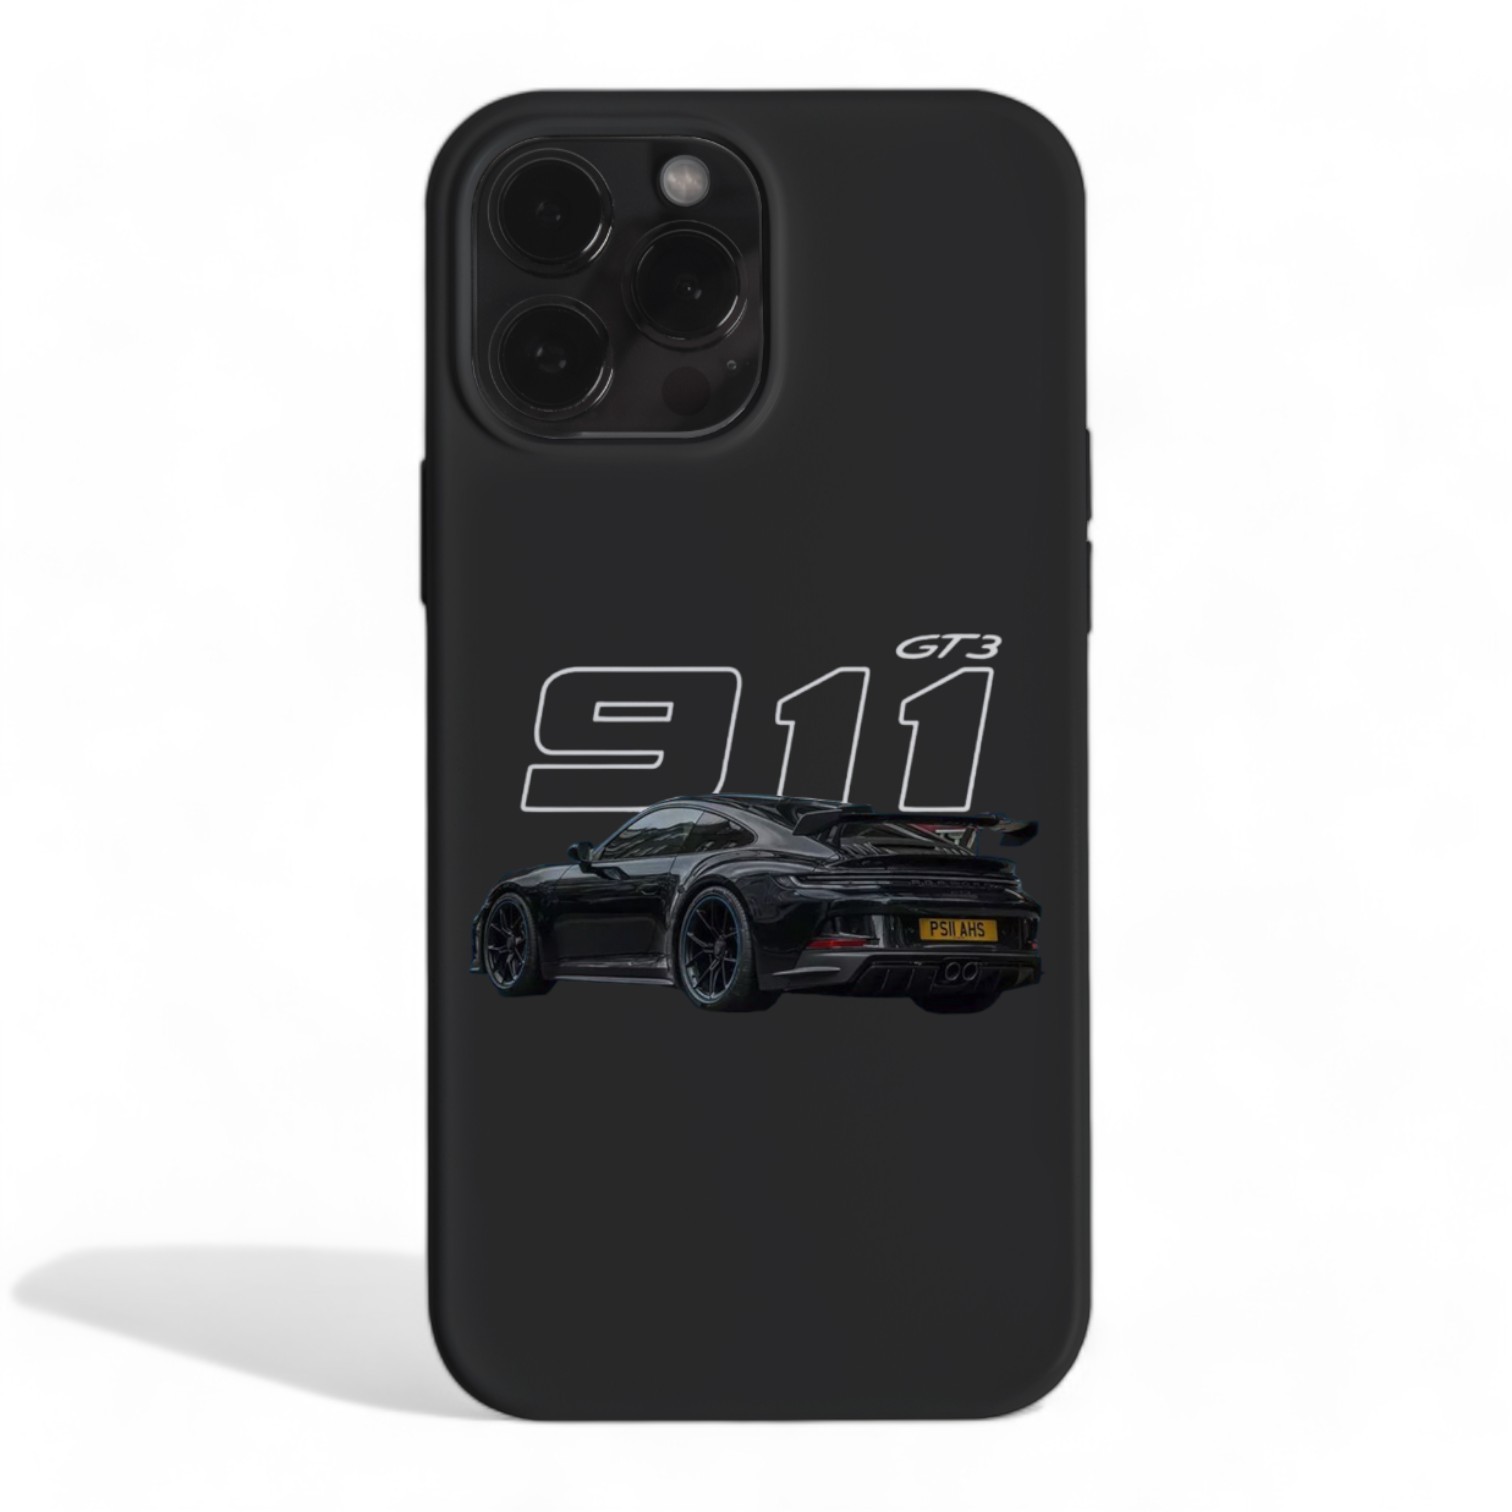 GT3 911 Case